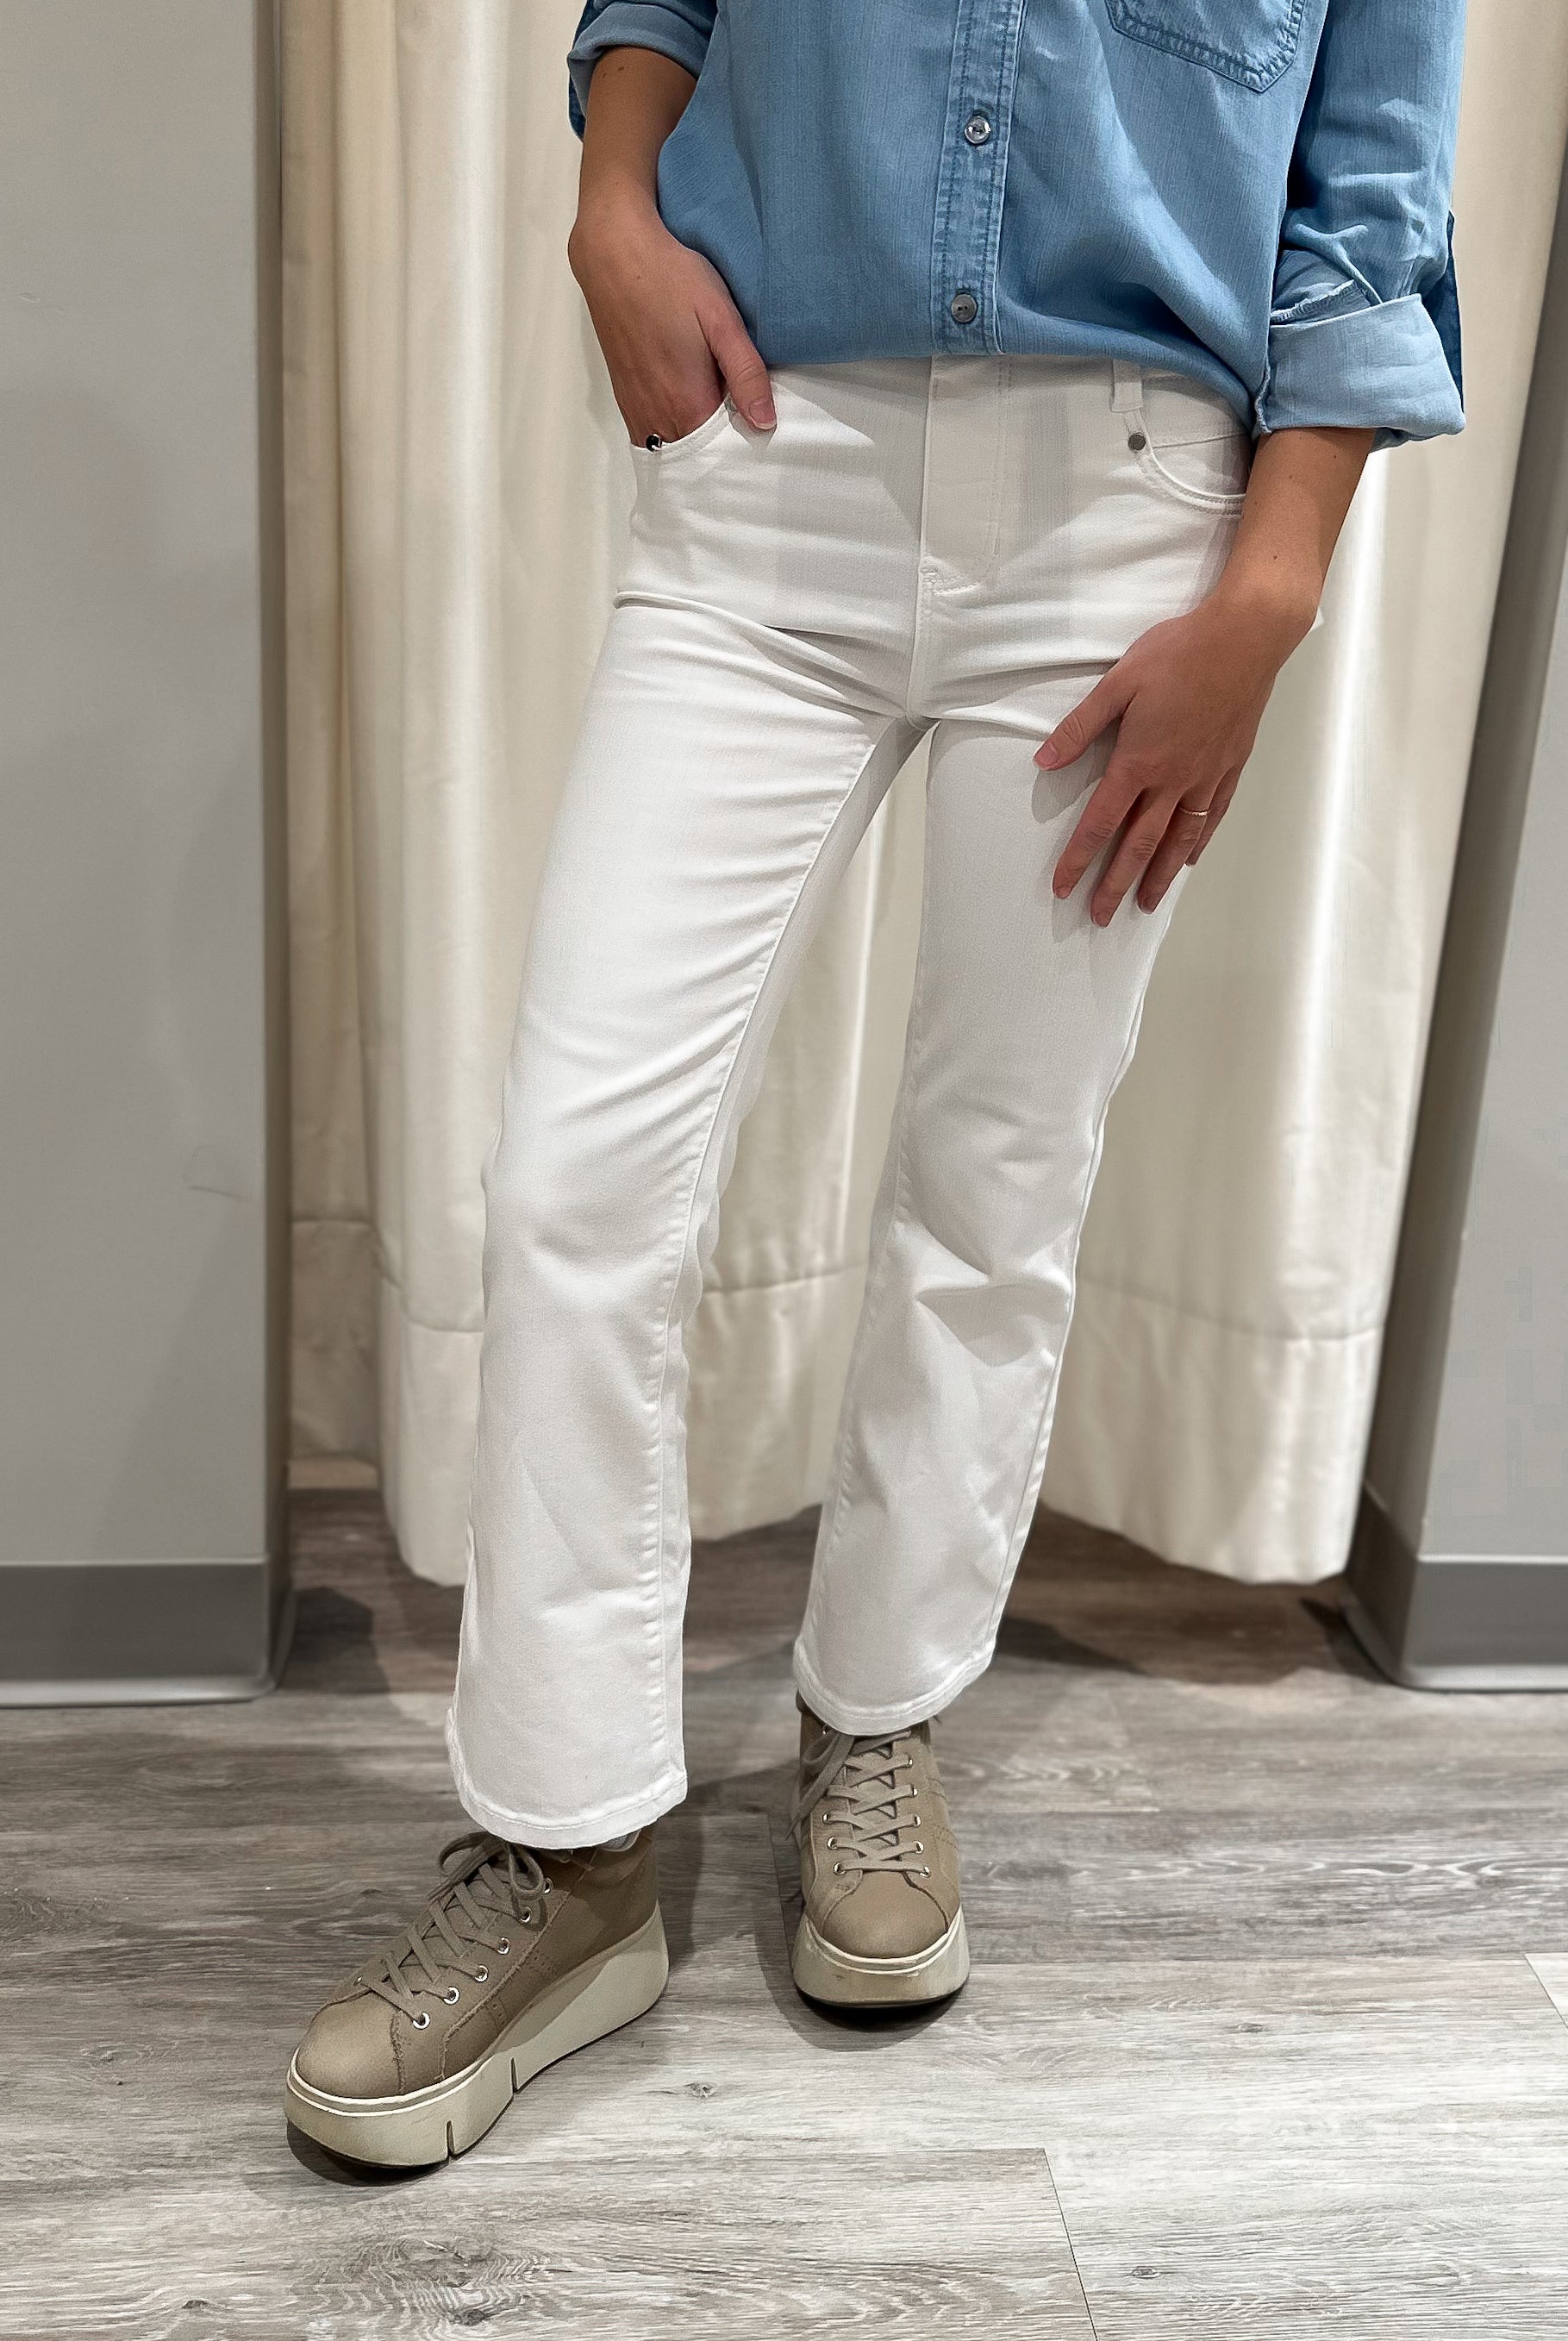 Mainstream Boutique Stillwater Women's Cropped Bright White Pull On Denim